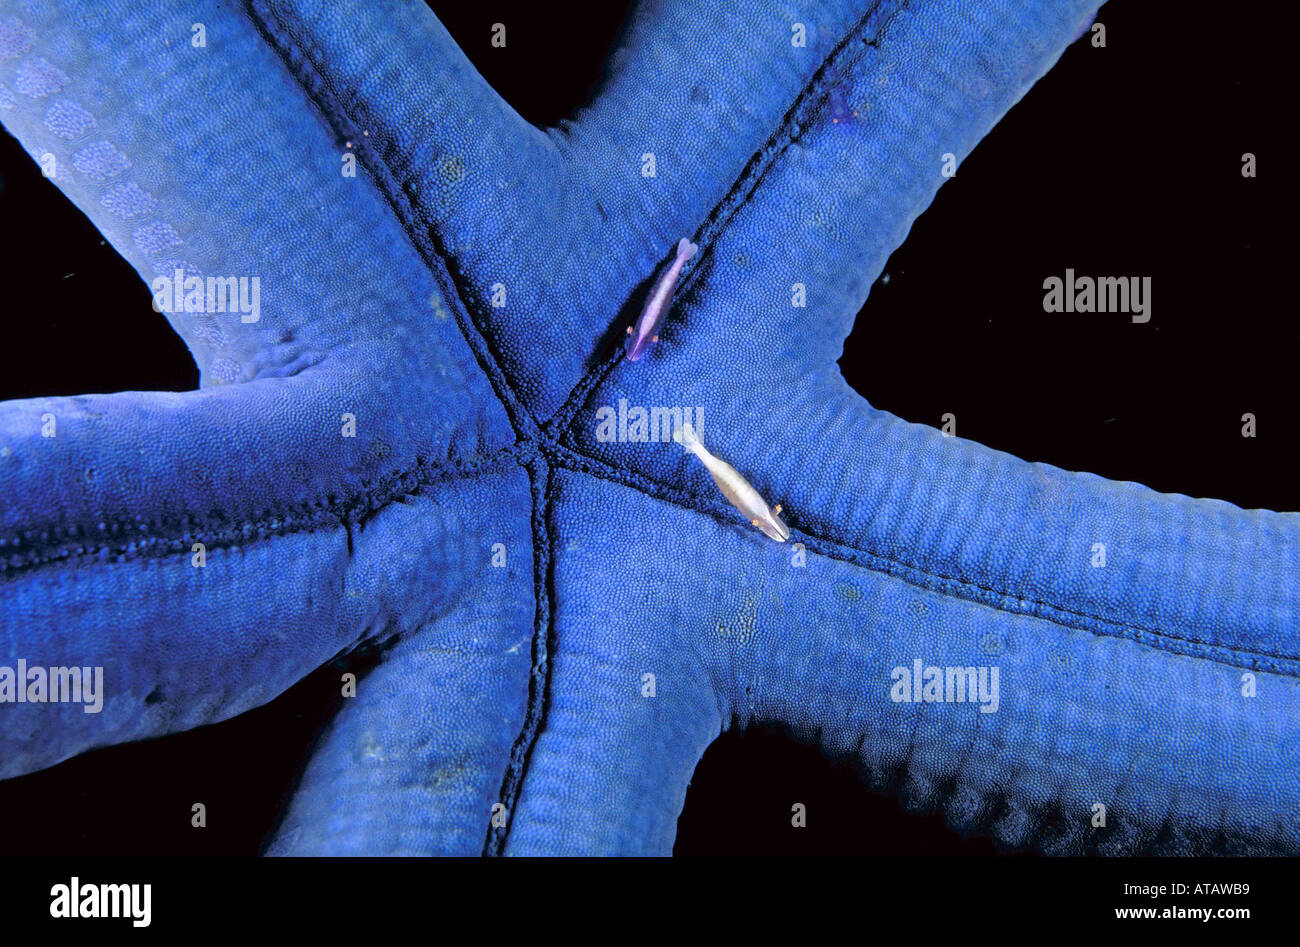 Imperator garnelen mit blauem empereur seestern crevettes Periclimenes imperator palaemonidae partenaire Similan en Thaïlande Banque D'Images